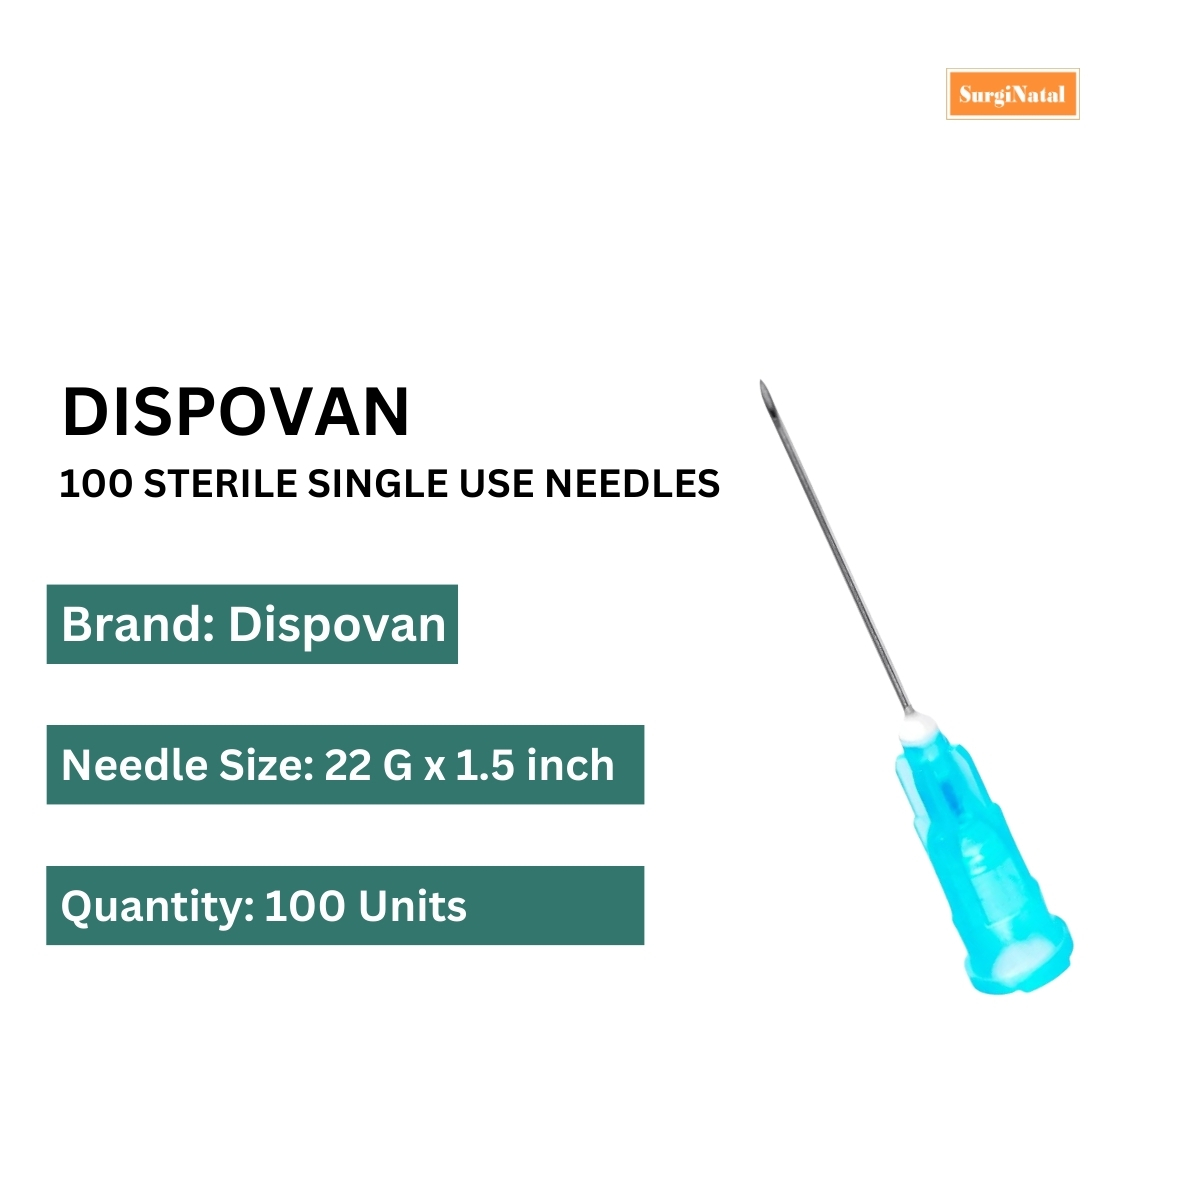 dispo van hypodermic needle - 22g*1.5 inch - 100 units pack